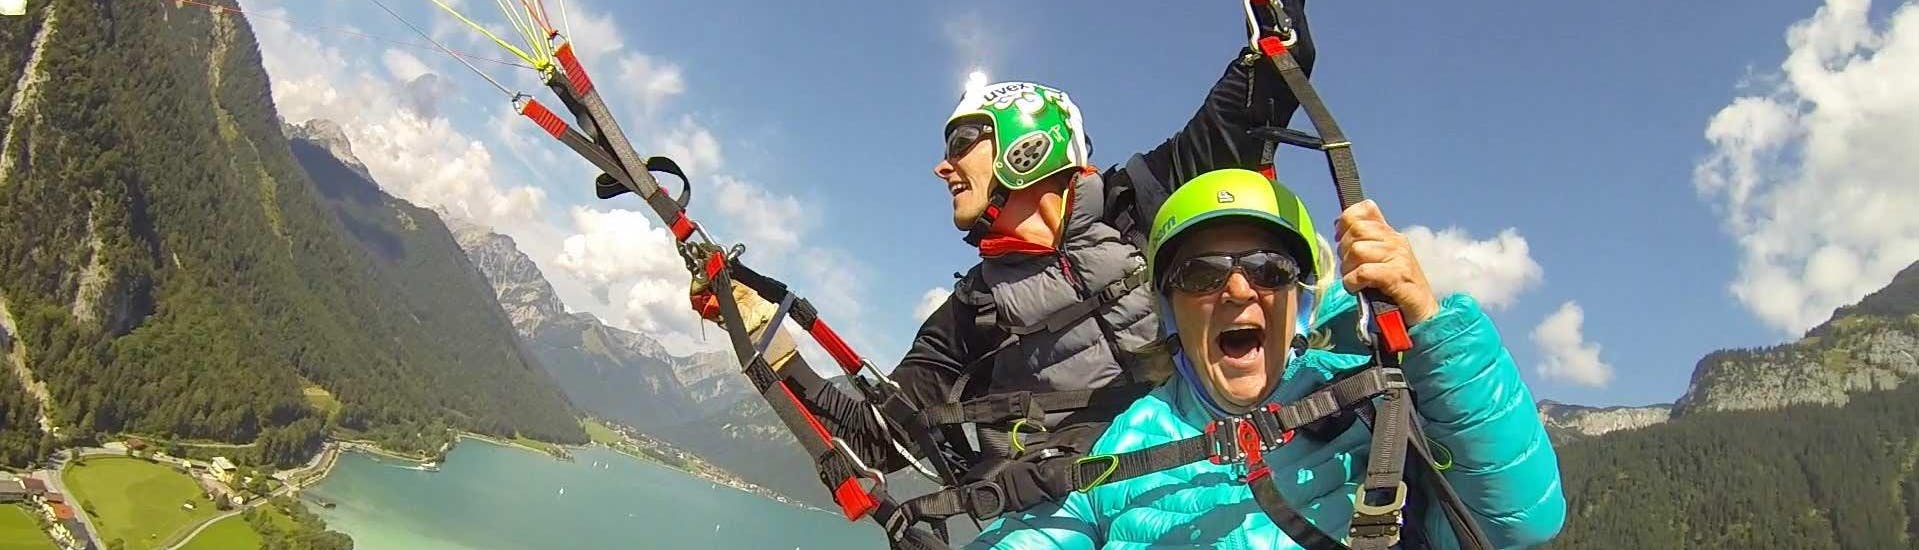 Tandem Paragliding "Glide Flight" - Achensee